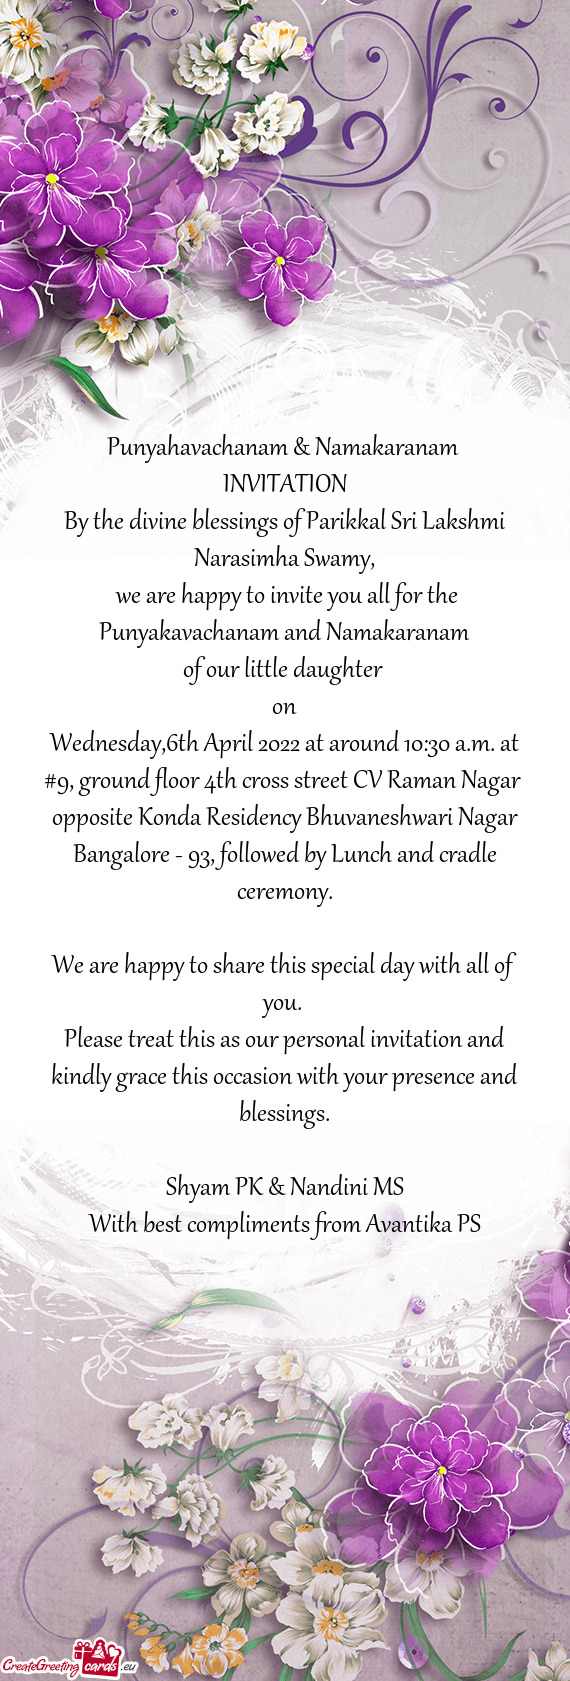 Wednesday,6th April 2022 at around 10:30 a.m. at #9, ground floor 4th cross street CV Raman Nagar o